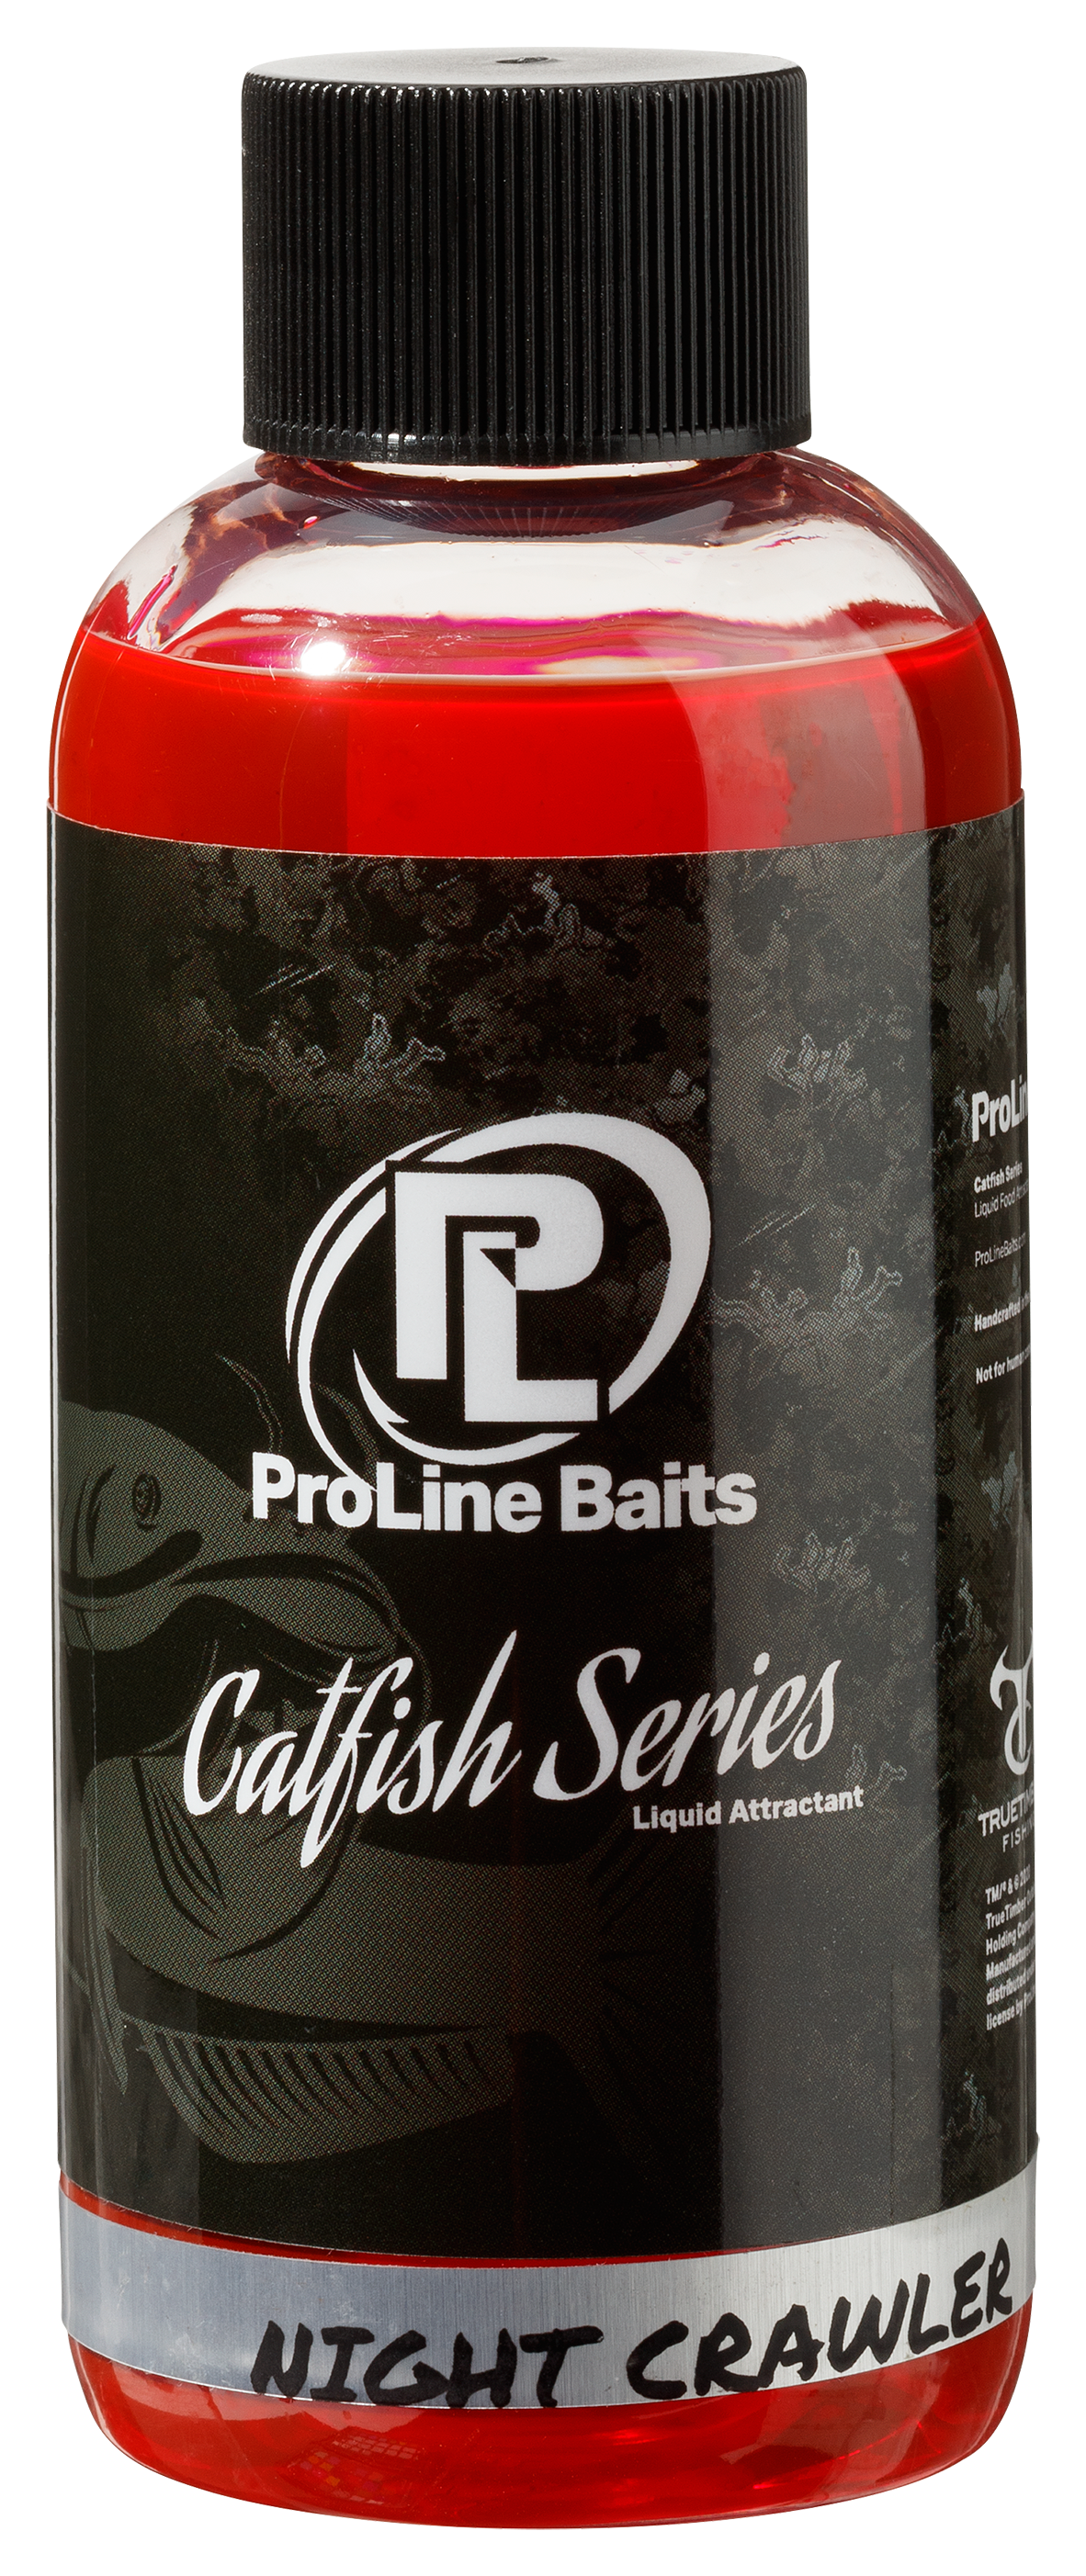 ProLine Baits Catfish Series Fish Attractant